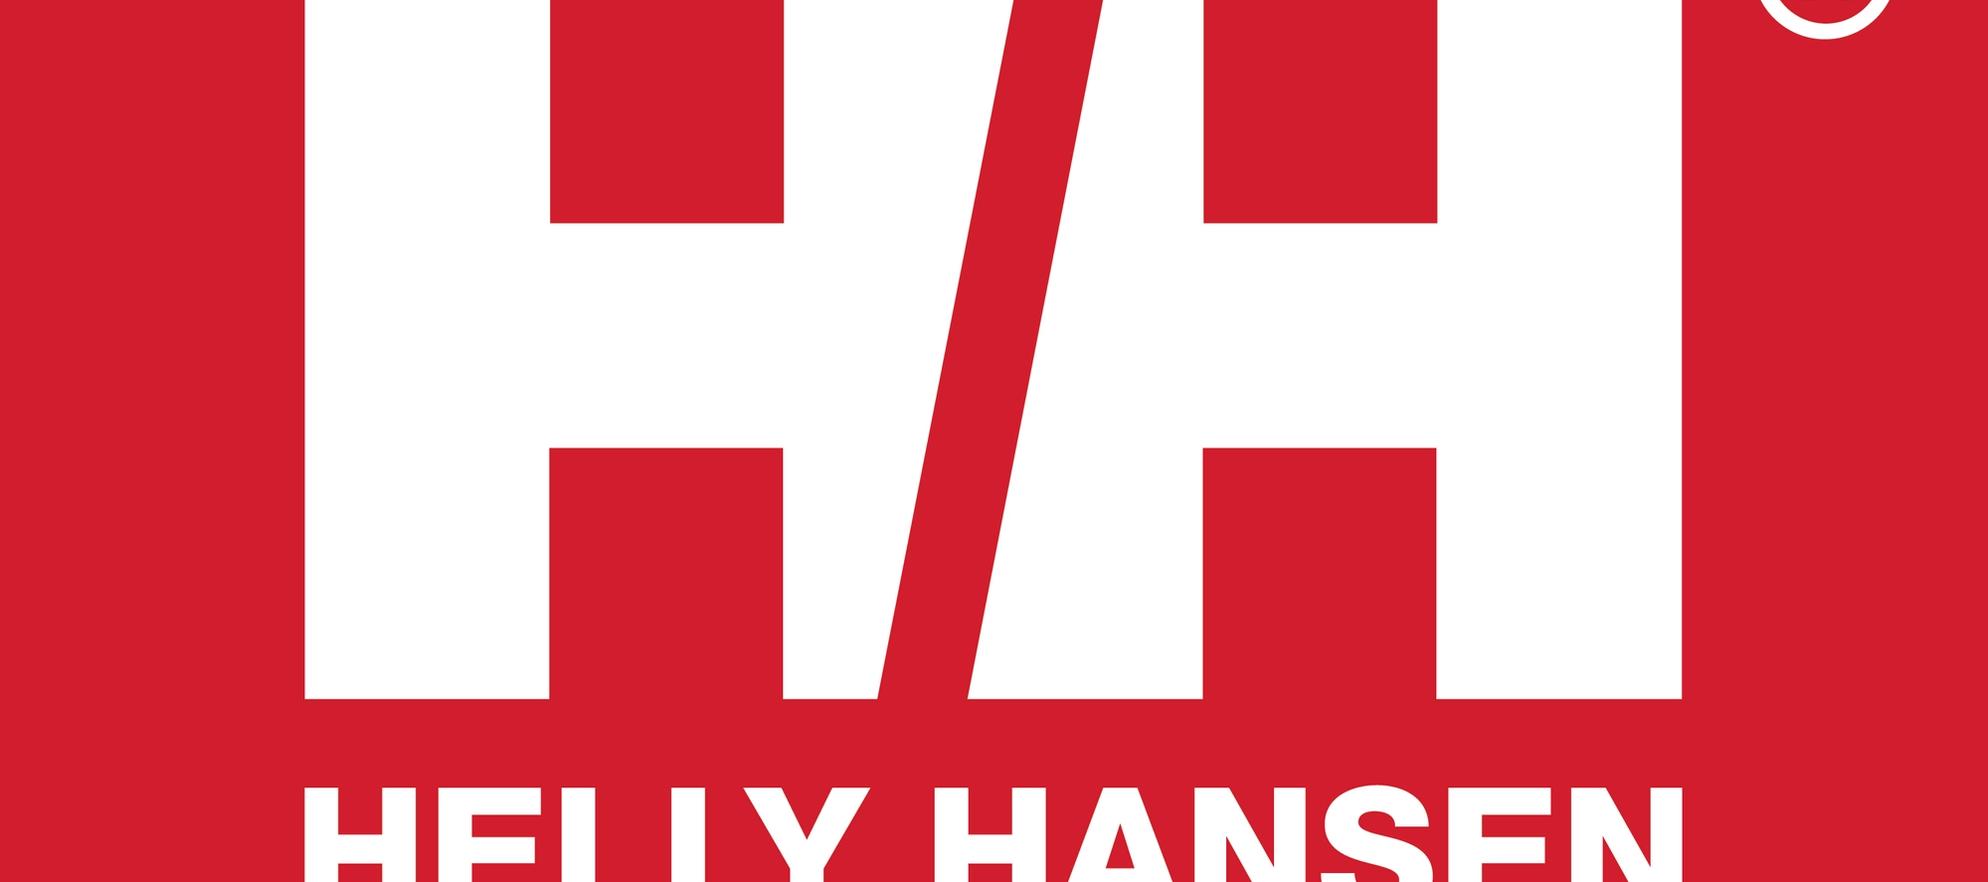  Helly Hansen Banff's Fundraiser for ARRCS